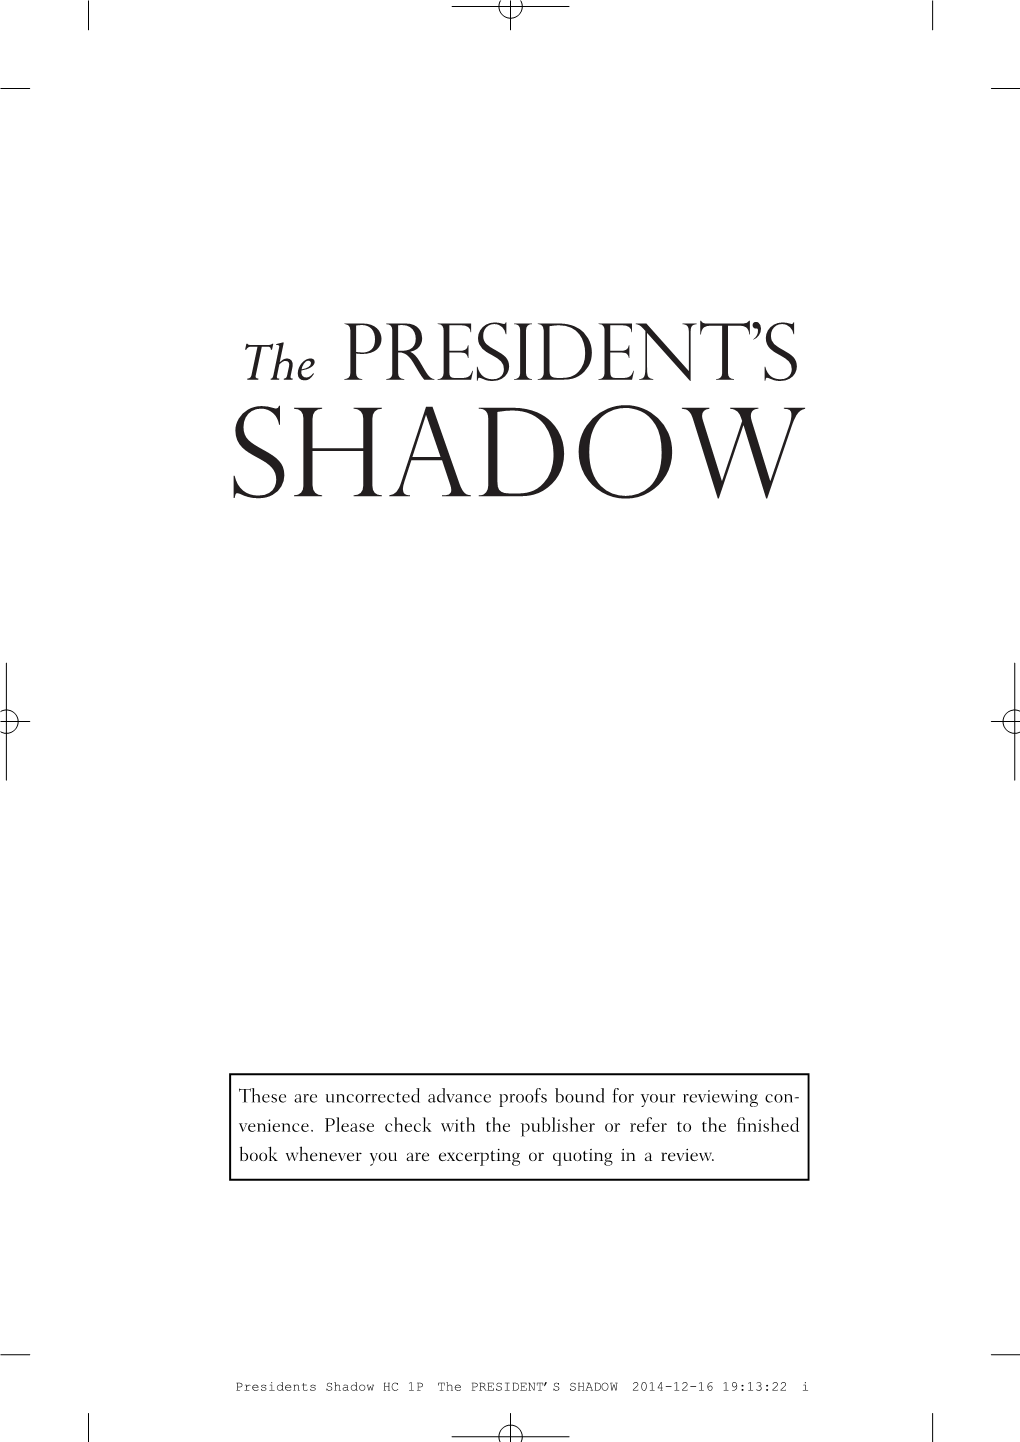 President's Shadow Design